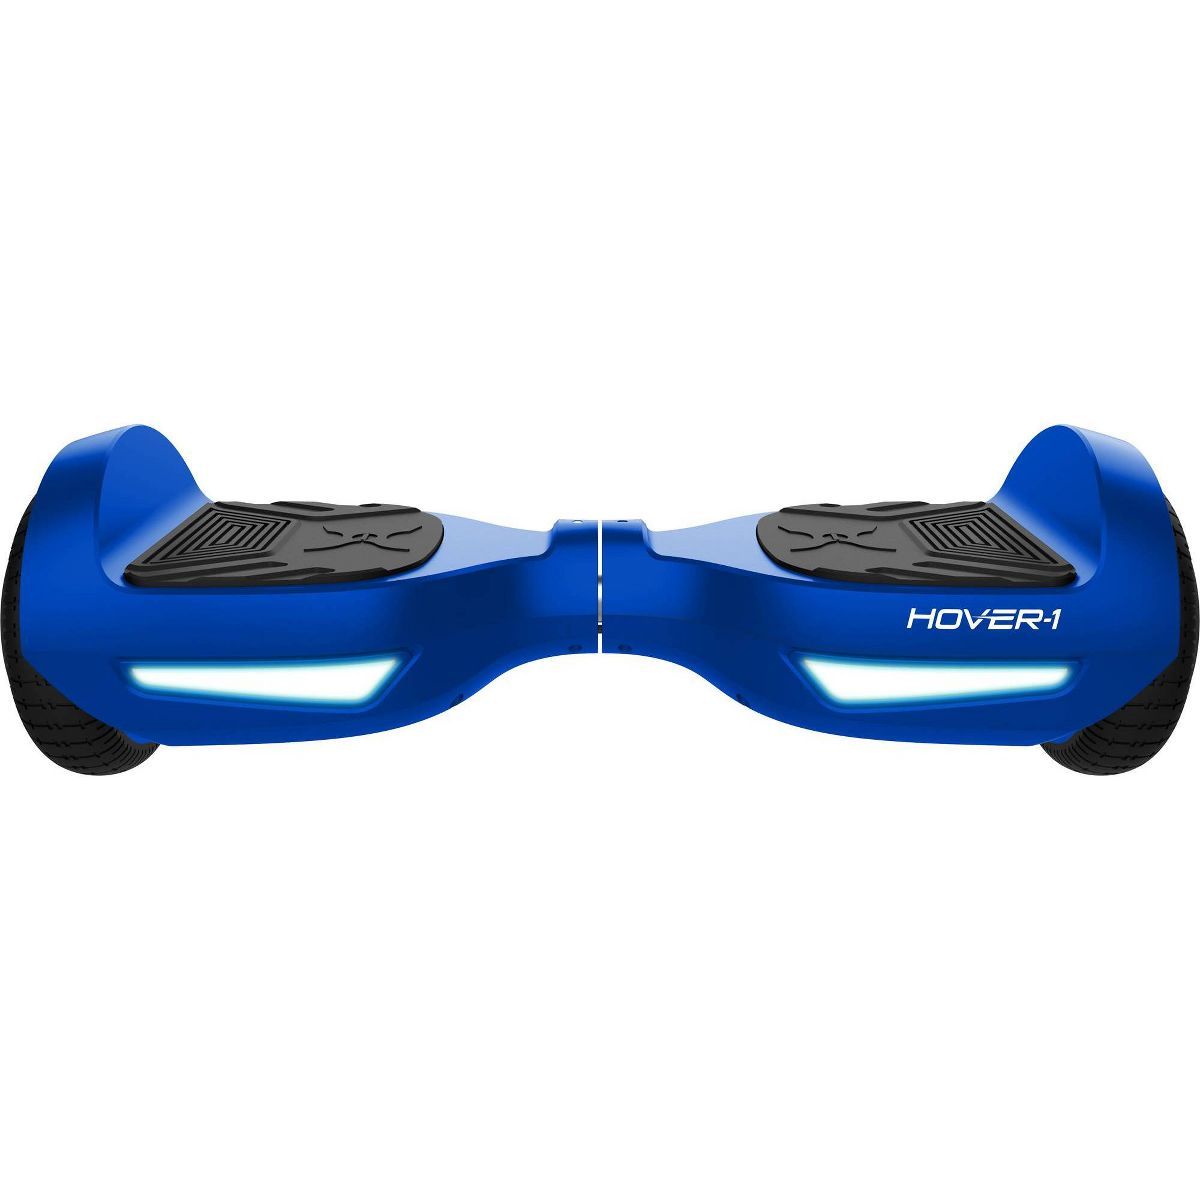 Hover-1 Drive Hoverboard - Blue | Target